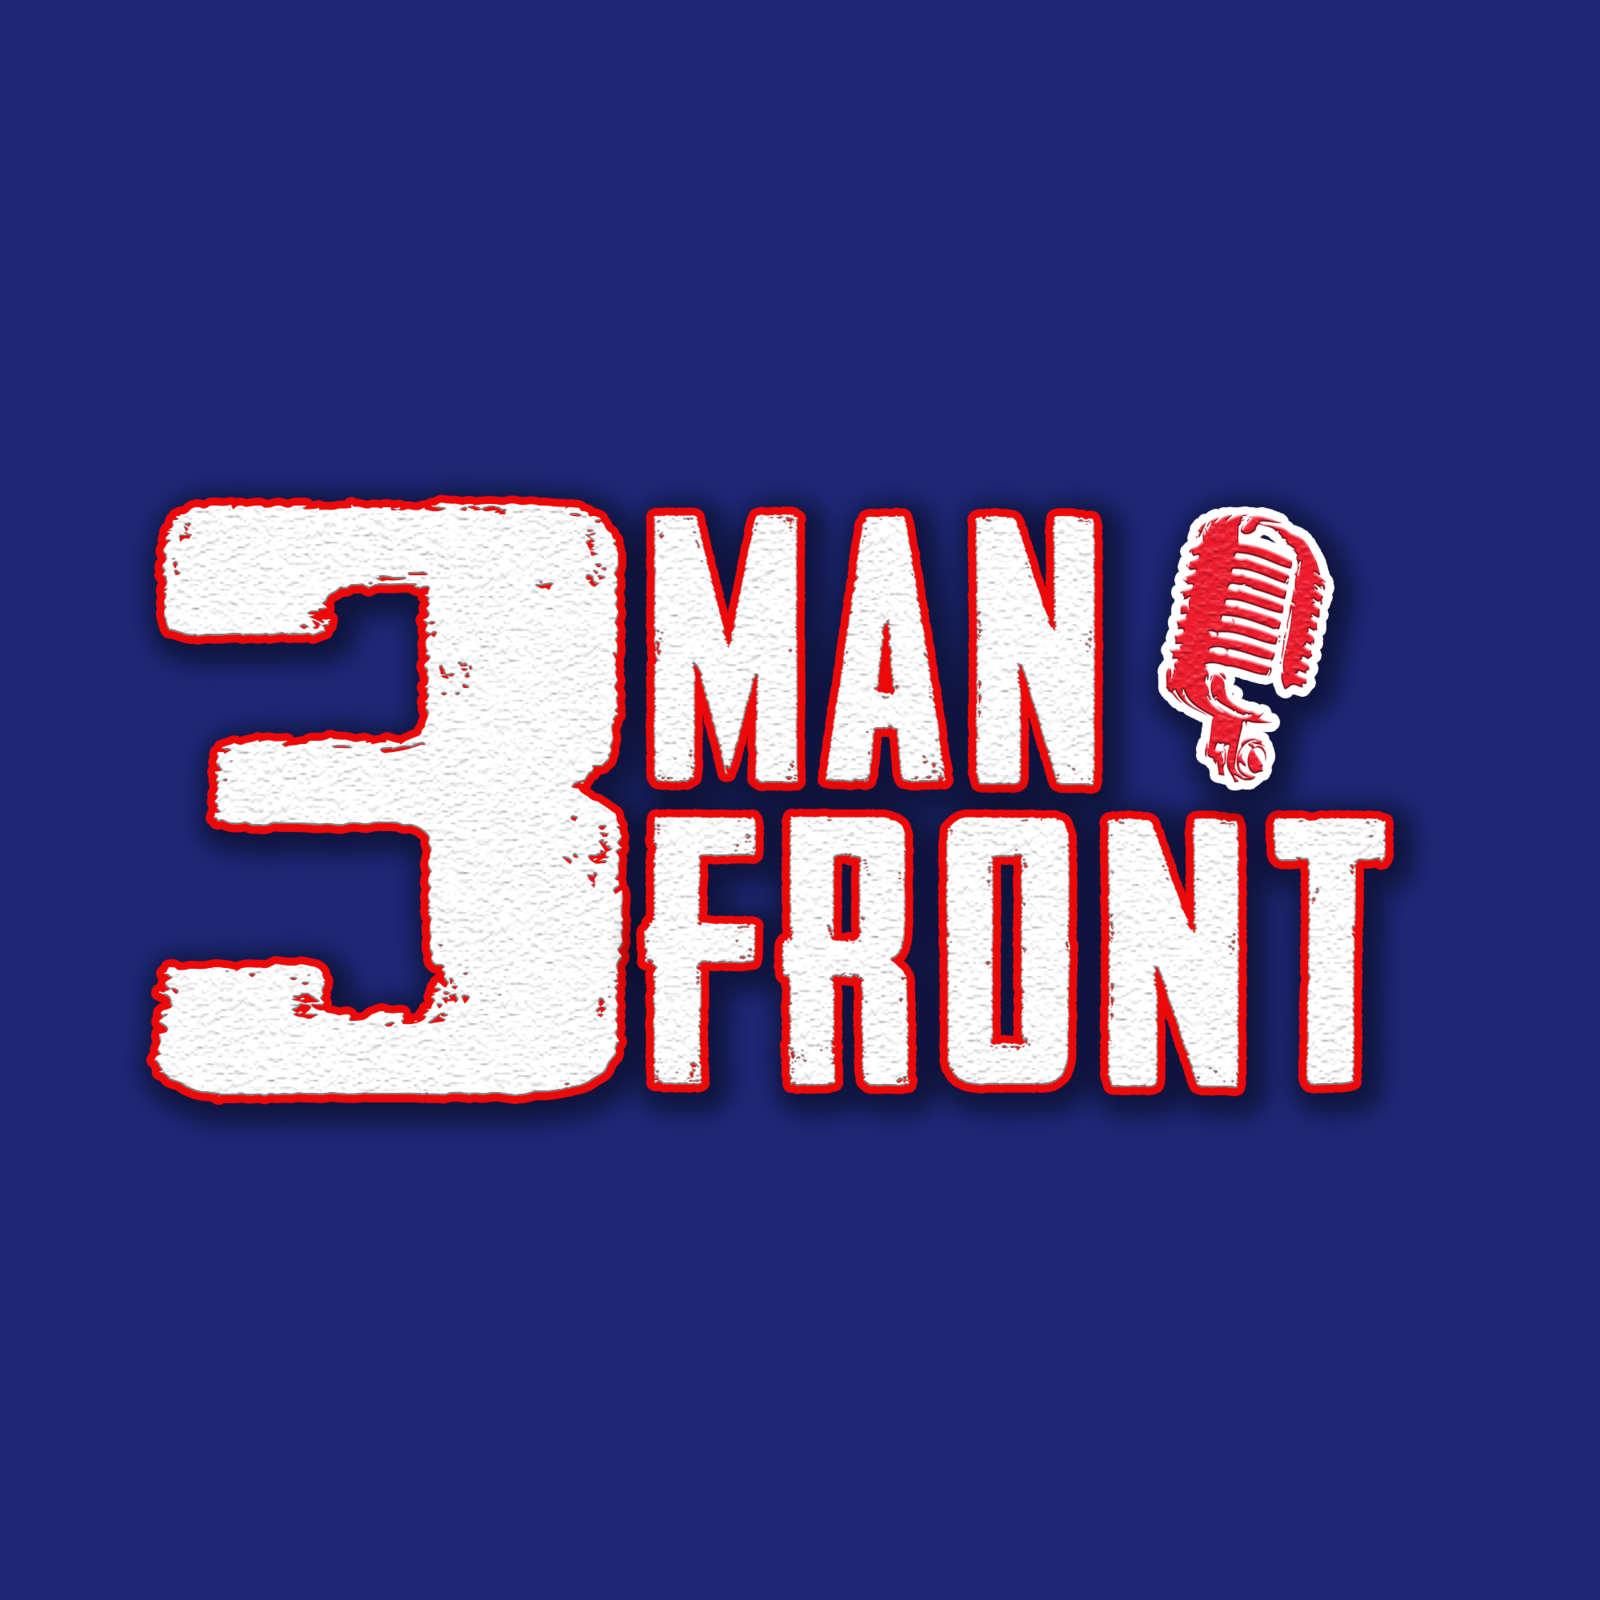 3 Man Front: Rodney Orr on Alabama spring football!